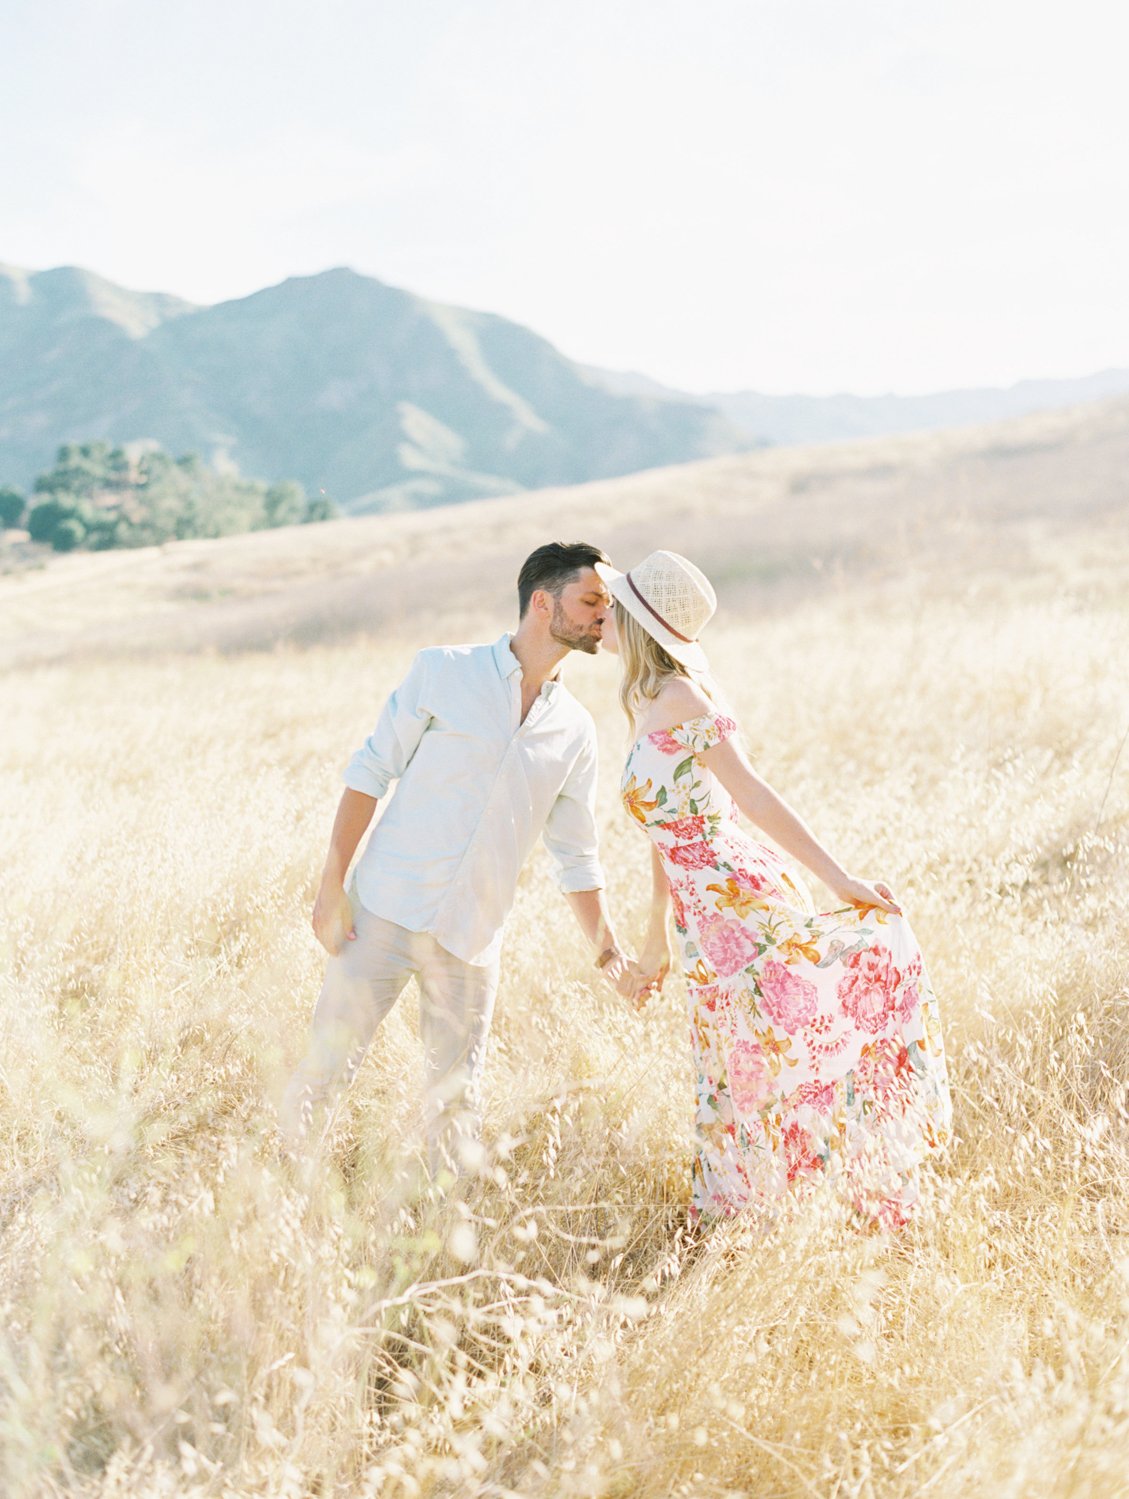 wisteria-photography.com | Wisteria Photography | Malibu Canyon | Weddings Engagement | Southern California Photographer-4.jpg